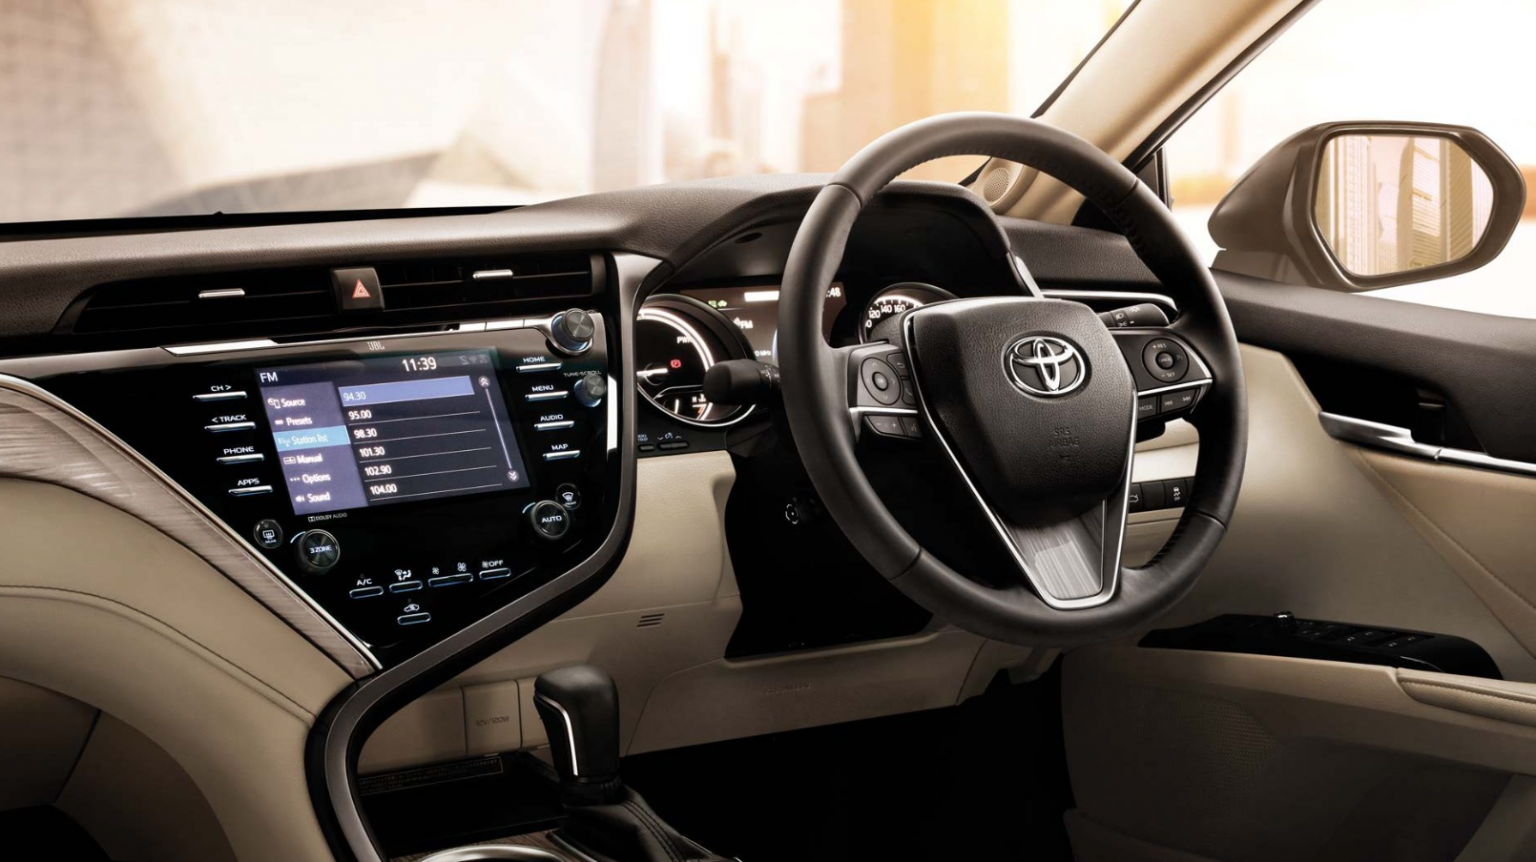 2024 Toyota Camry Hybrid Specs